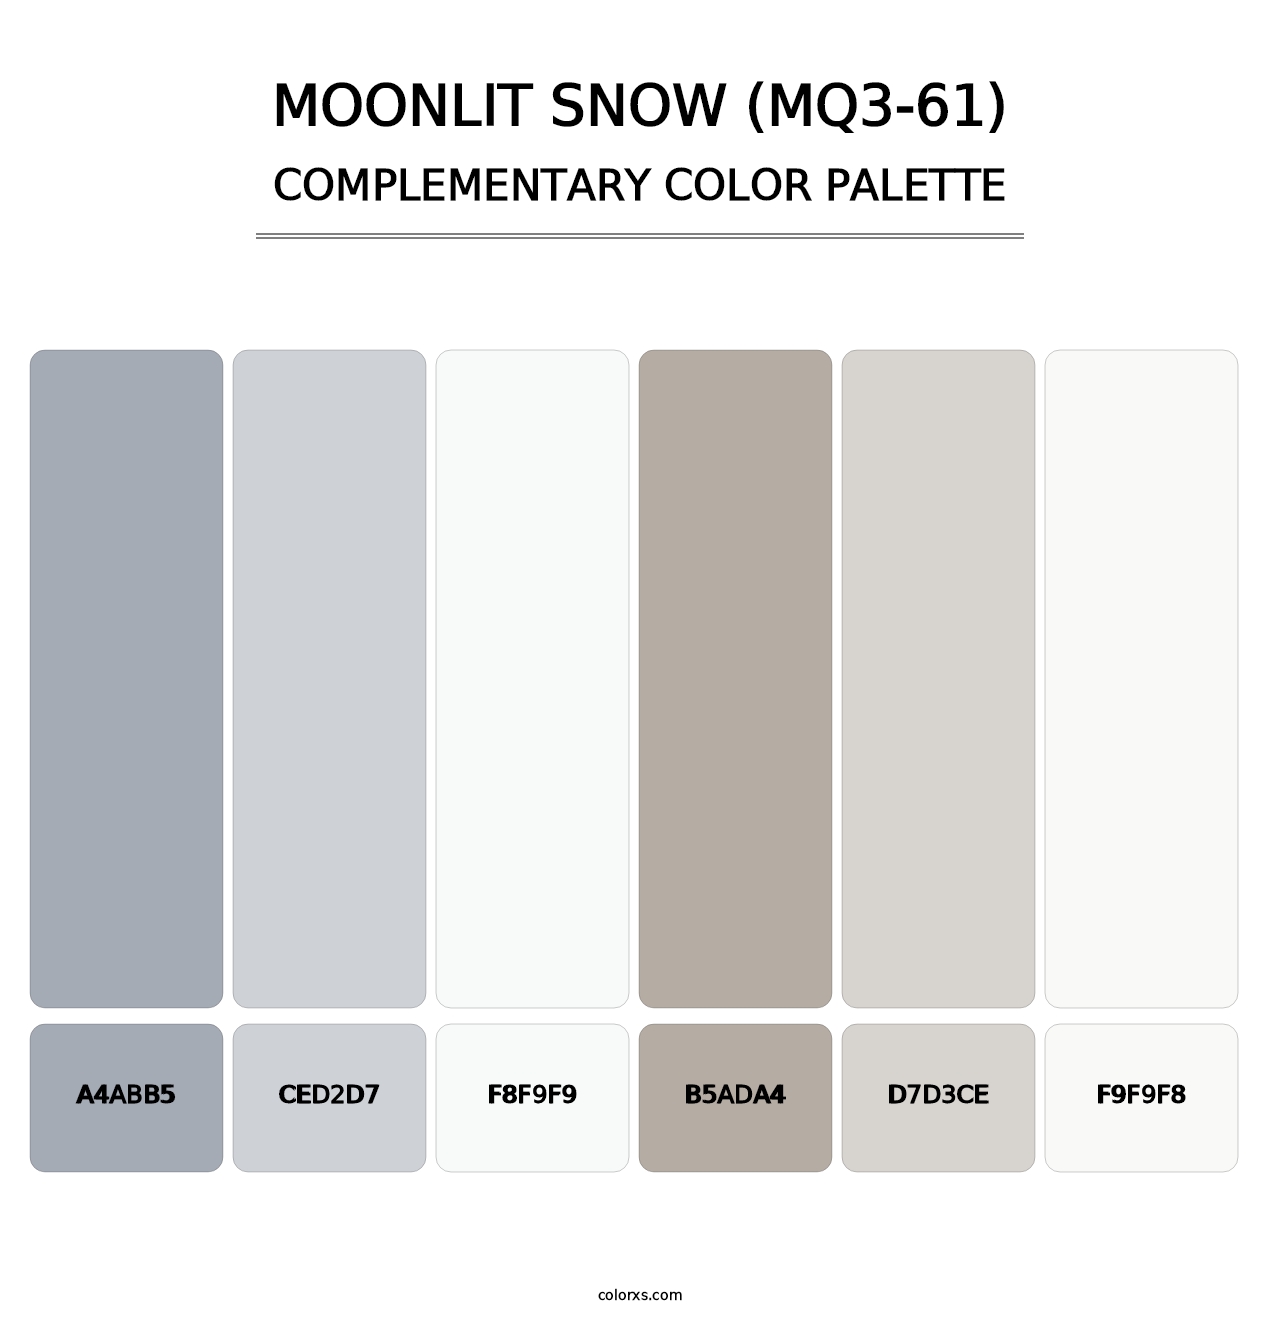 Moonlit Snow (MQ3-61) - Complementary Color Palette